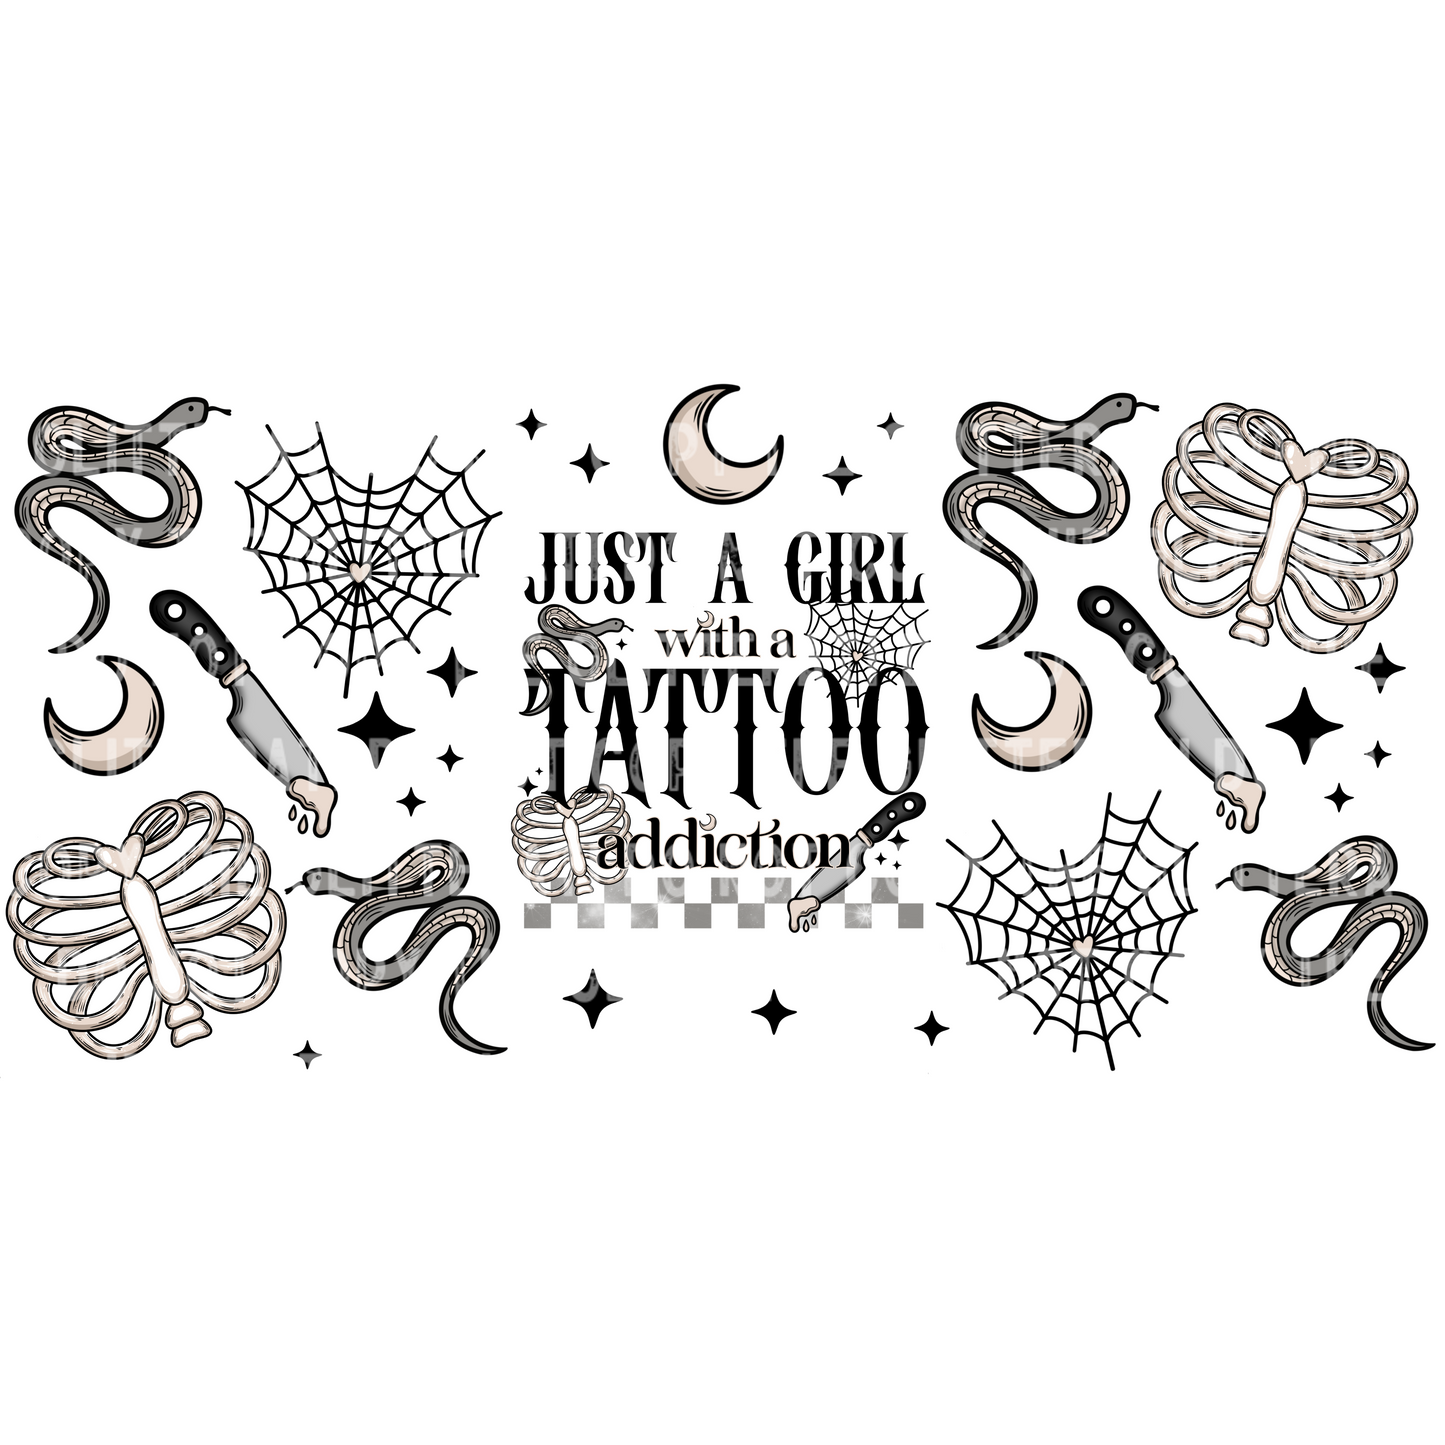 Tattoo Addiction - 16oz Libbey Sublimation Print